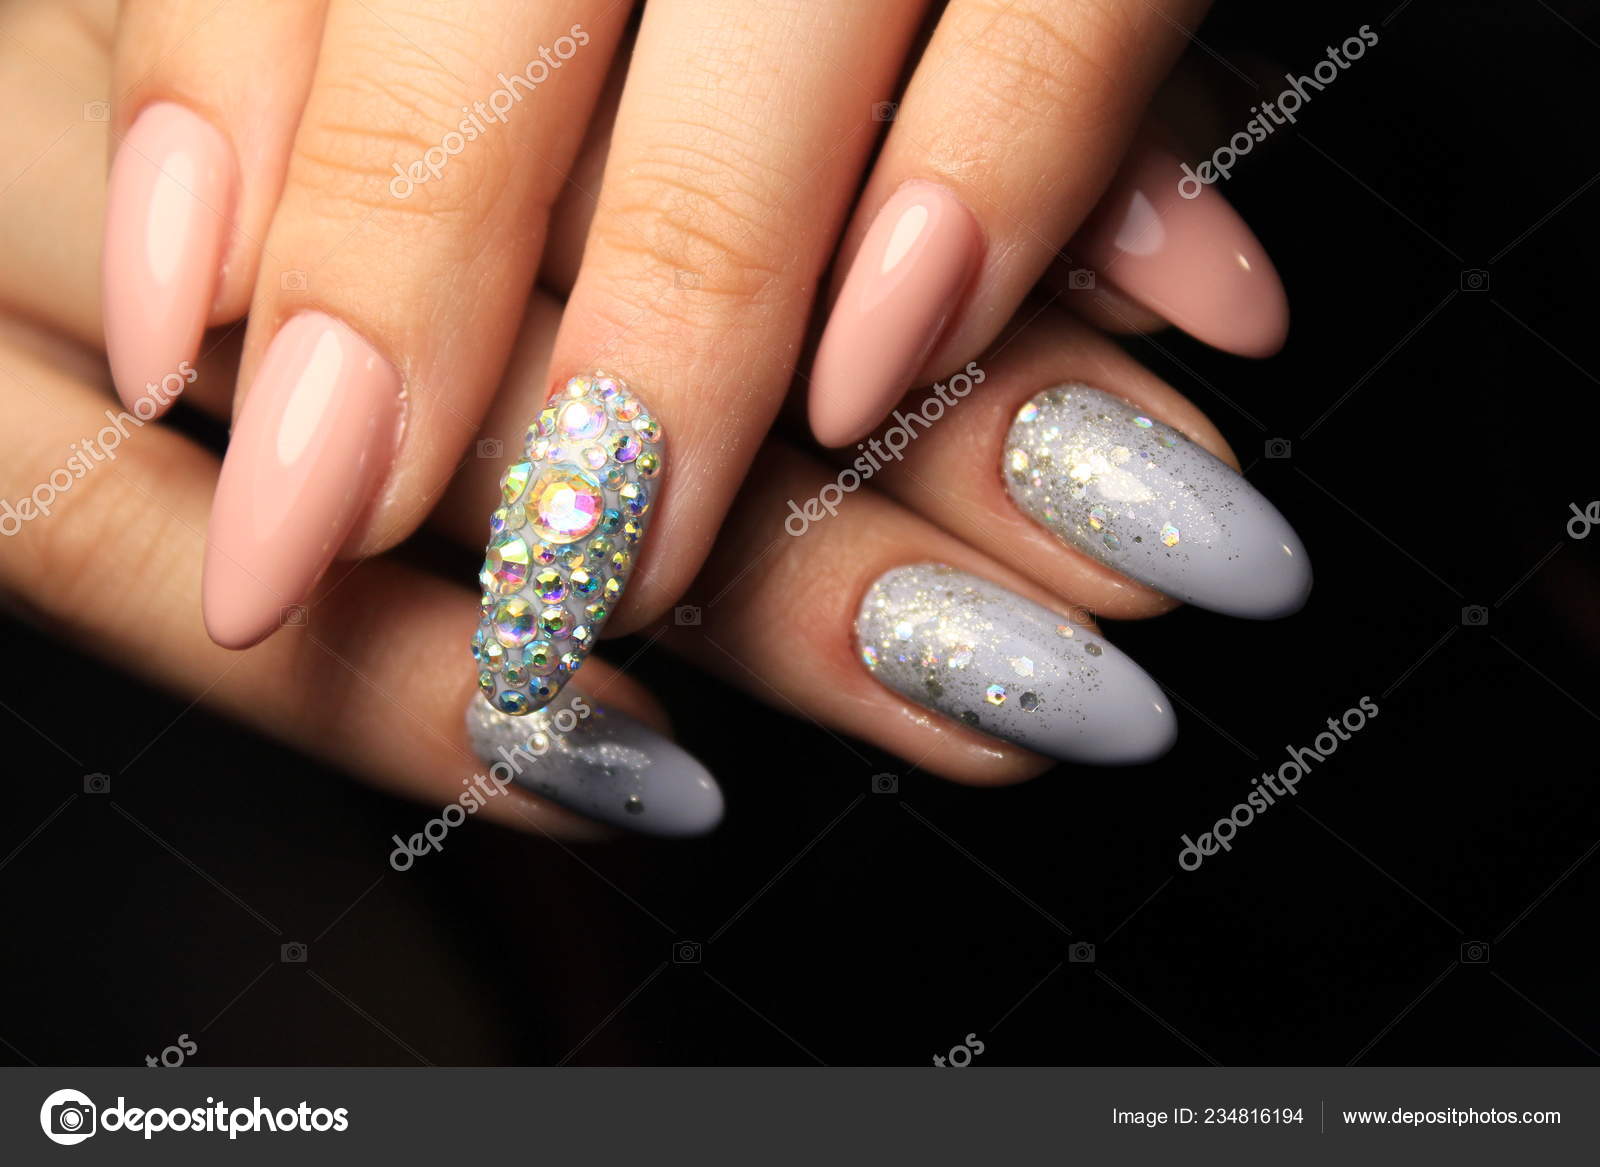 Premium Photo | CloseUp of Female Hands Featuring Artistic Nail Designs